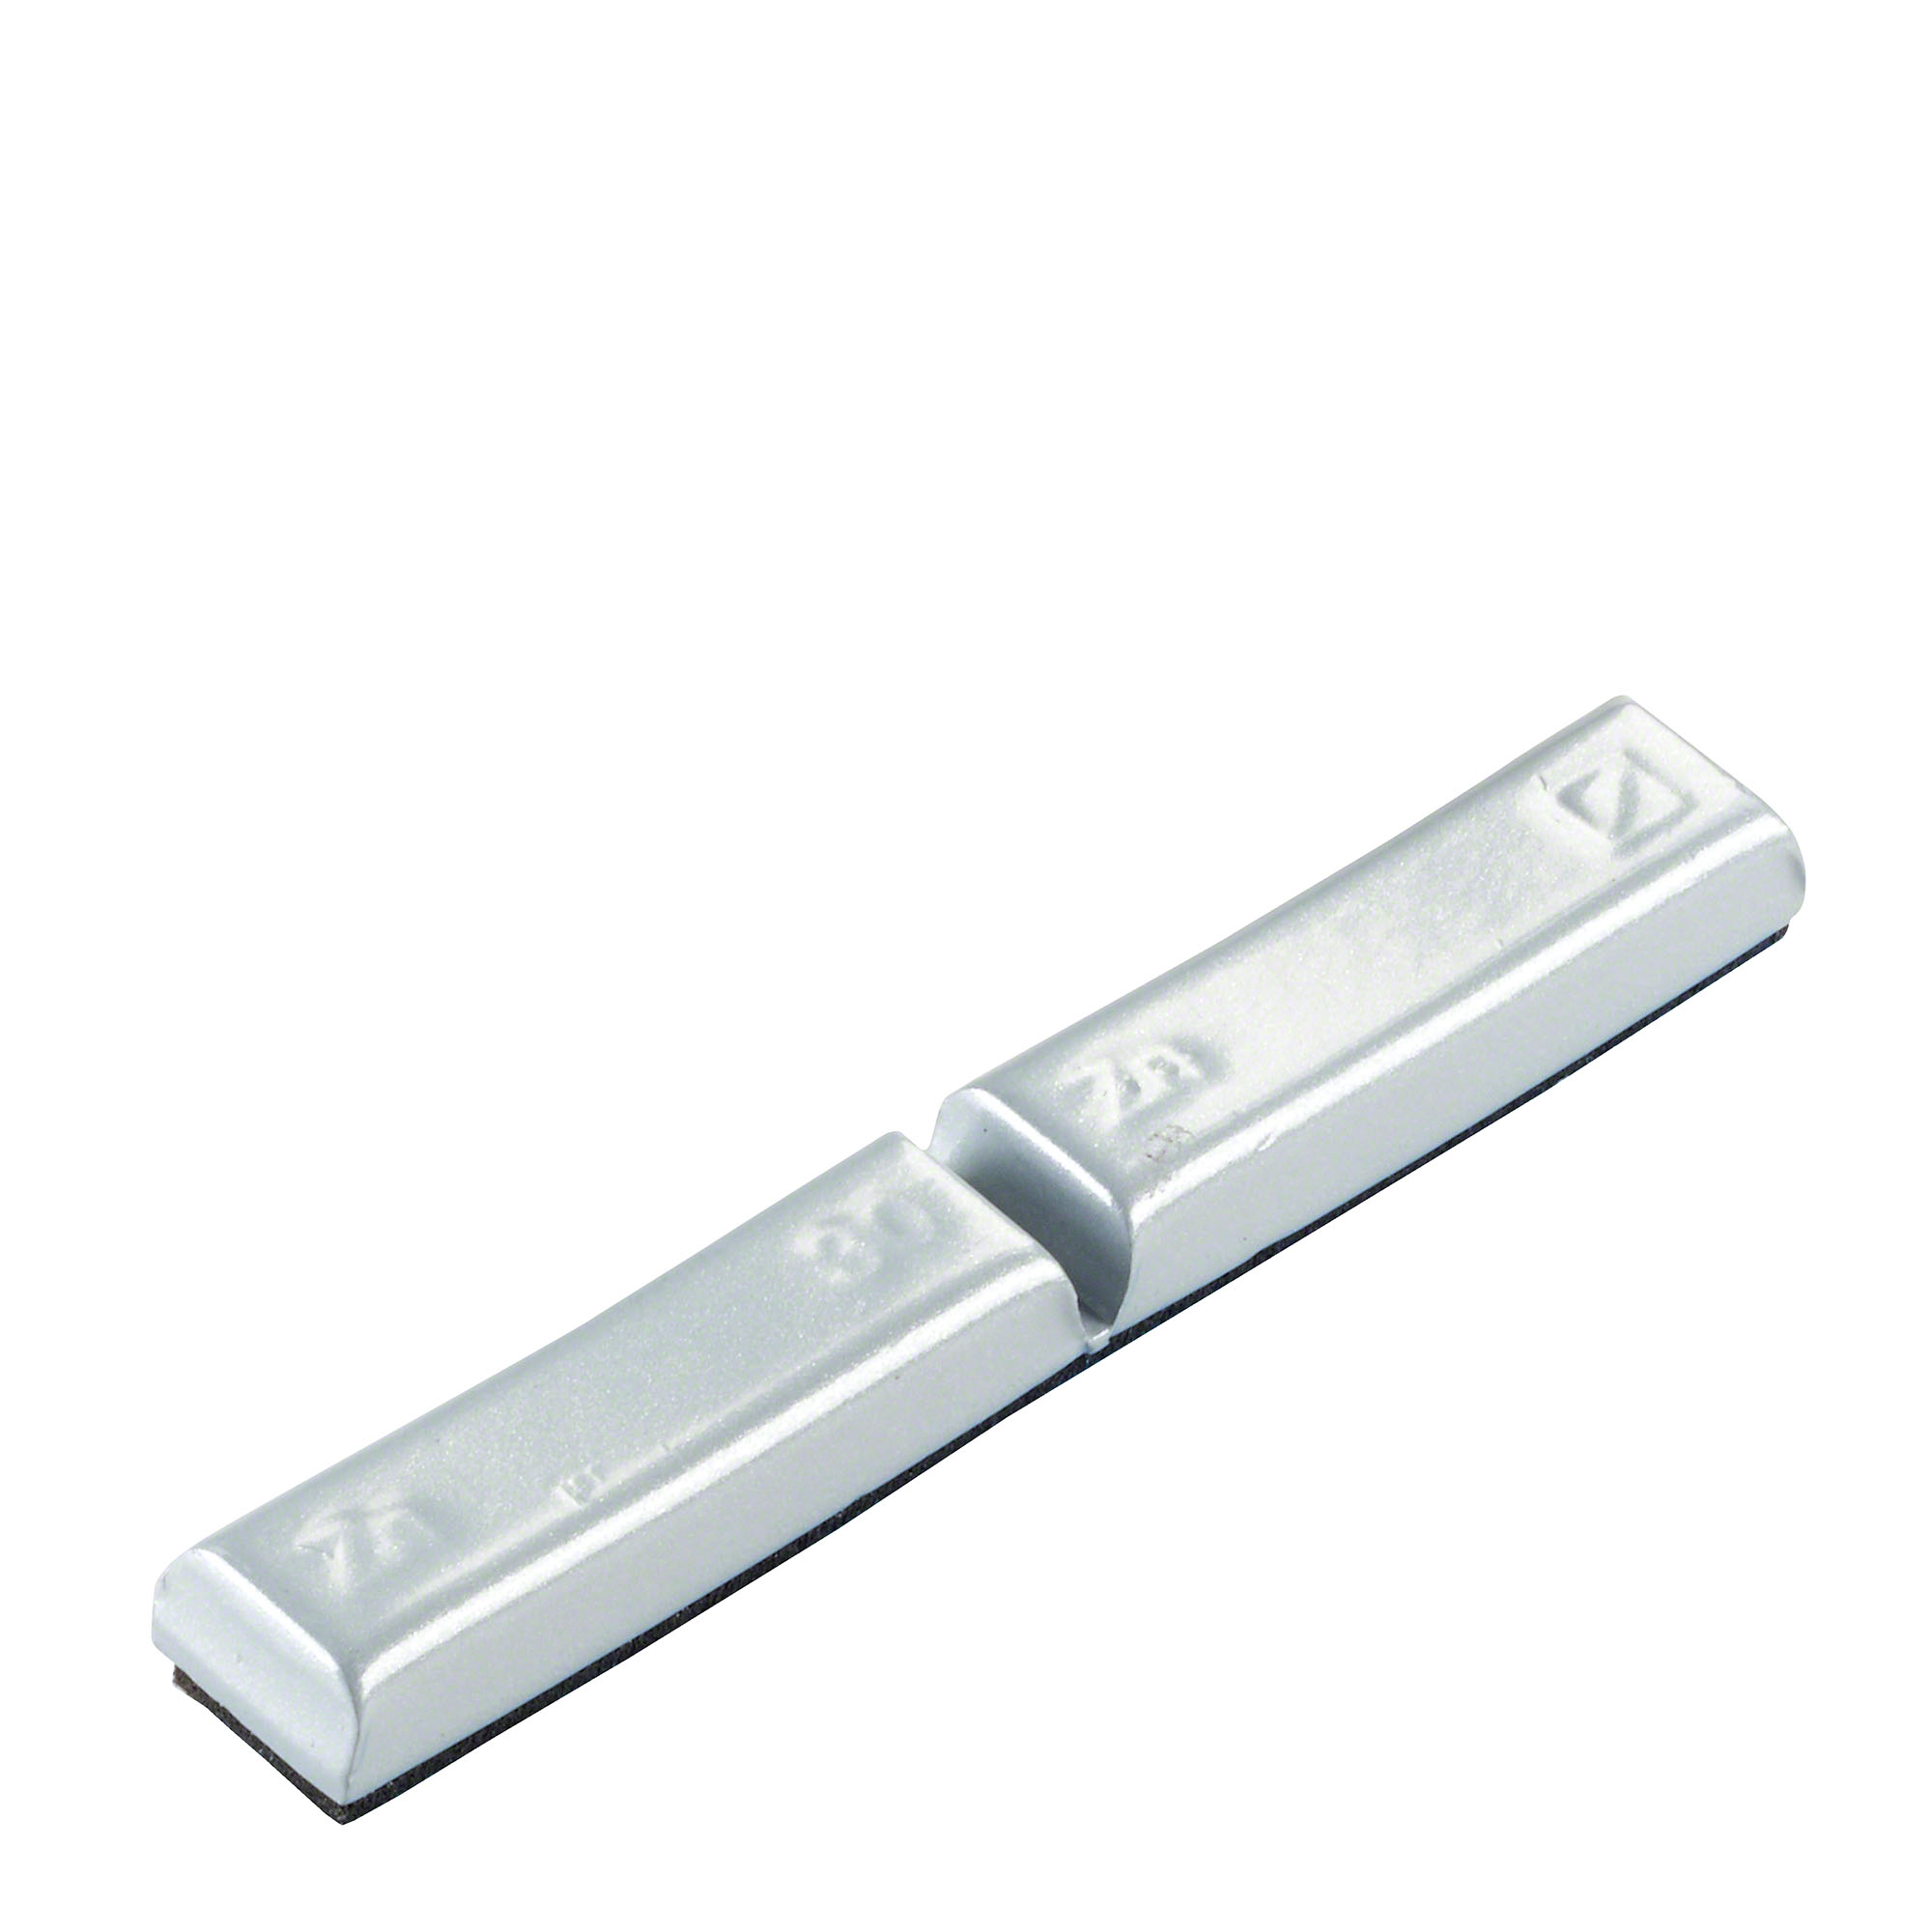 contrapesa adhesiva - Typ 799, 30 g, zinc, plata